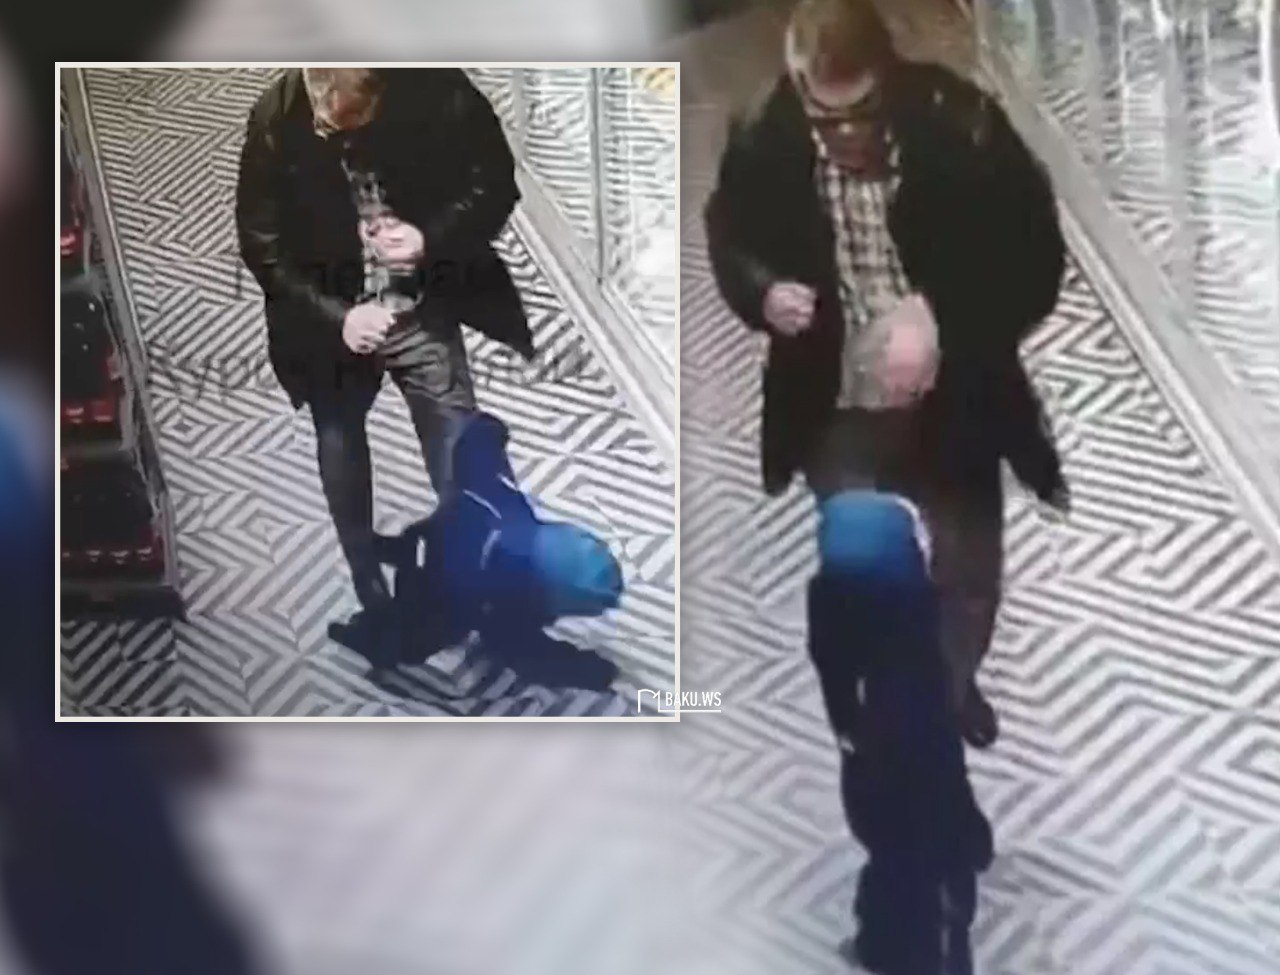 Мужчина c размаху ударил ребенка кулаком в лицо в супермаркете - ВИДЕО